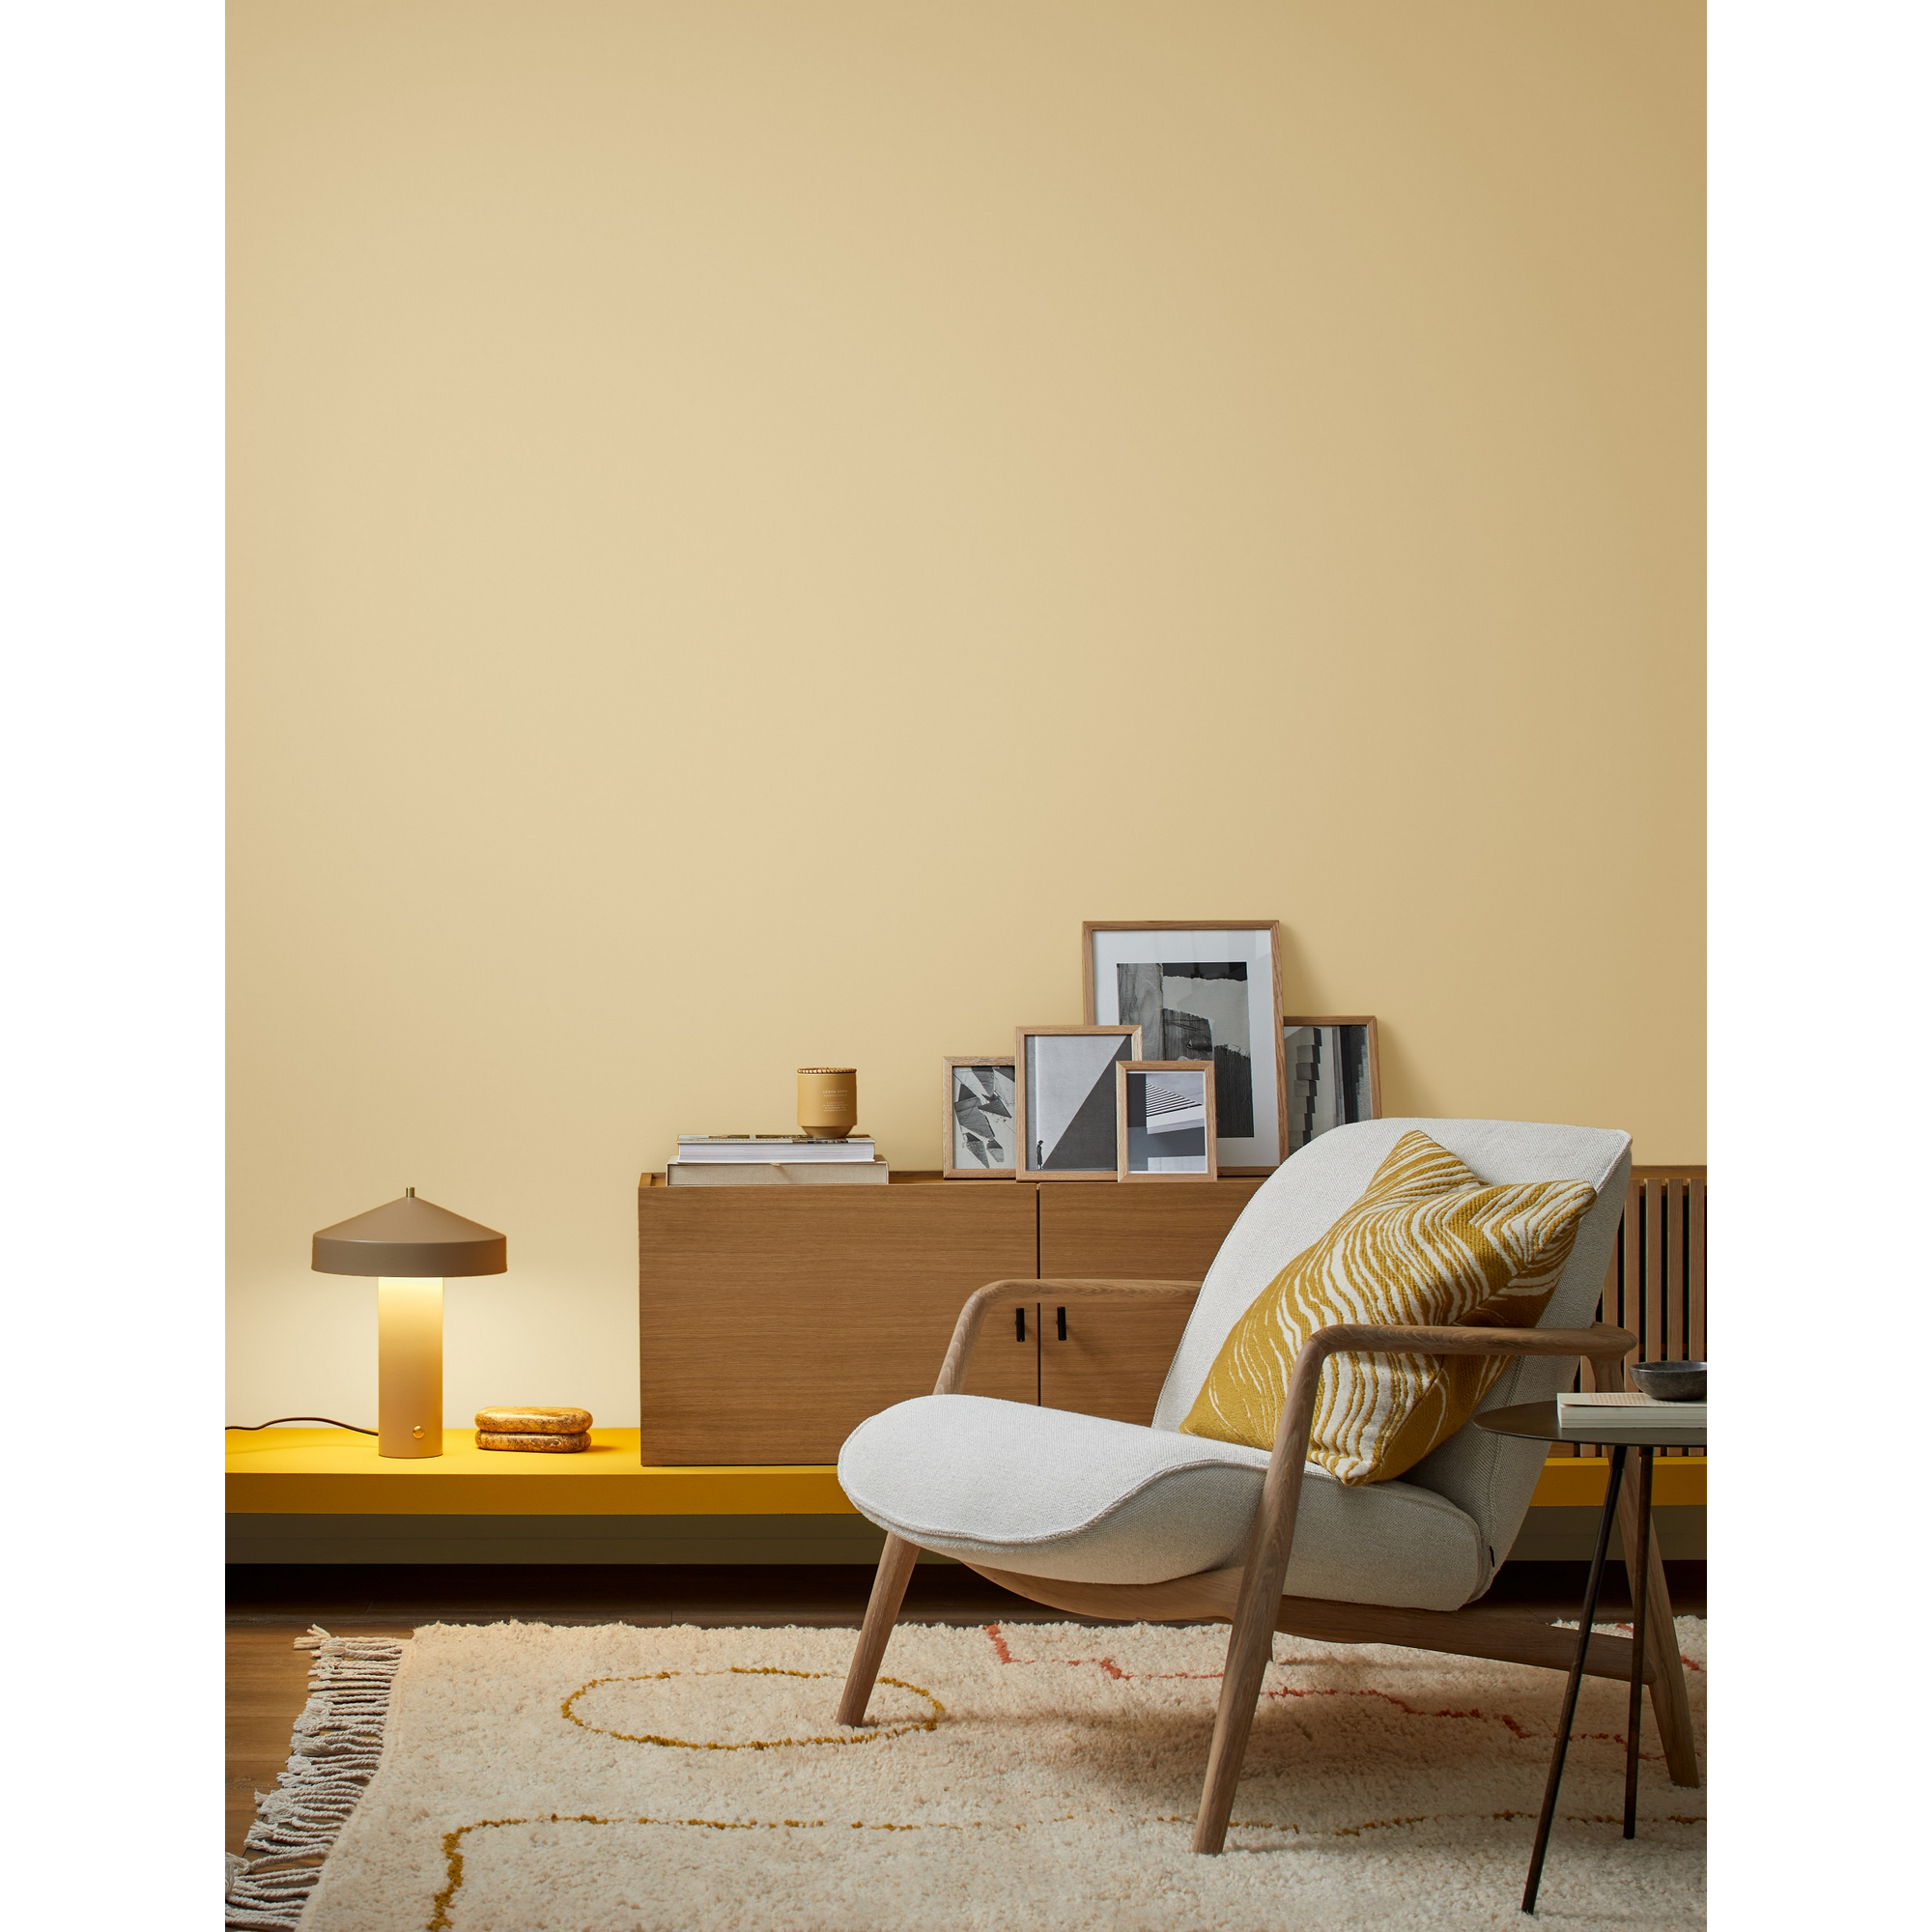 Wandfarbe 'Pure Farben' beigegelb matt 2,5 l + product picture